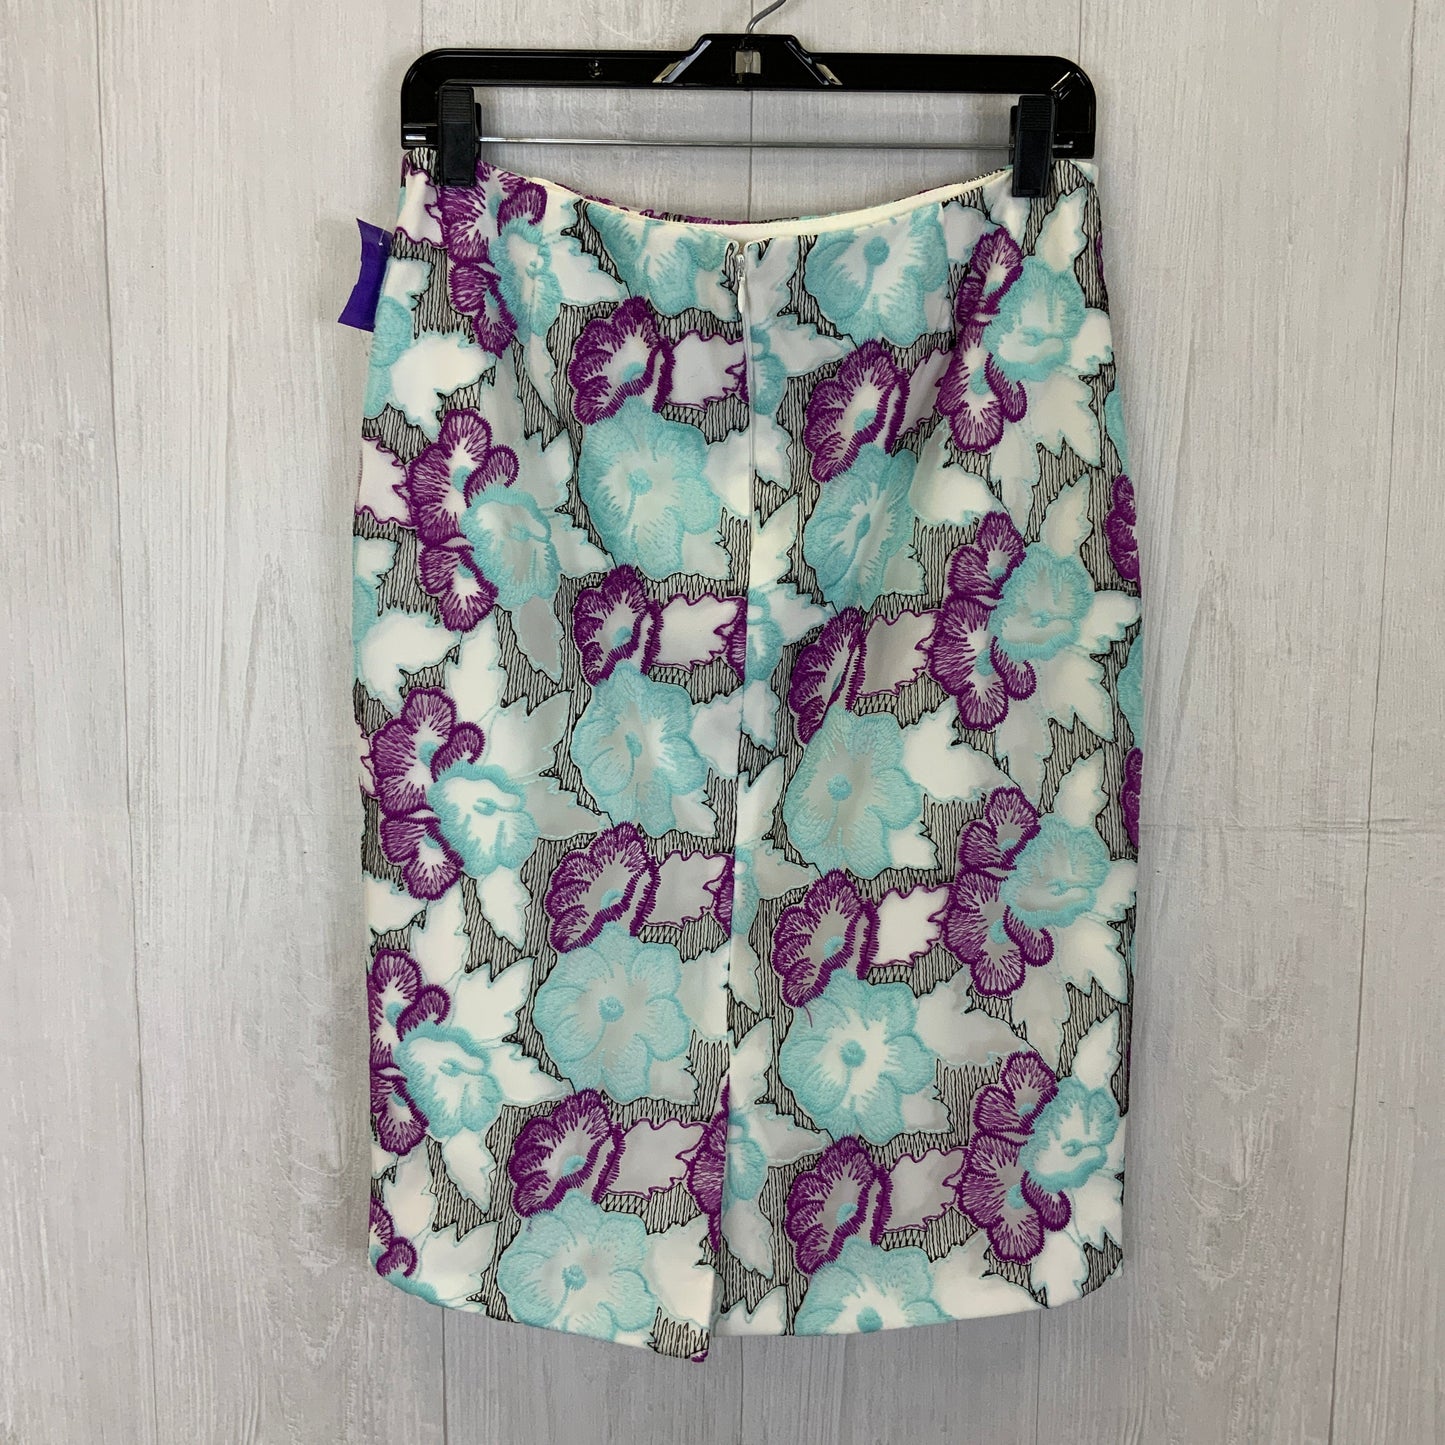 Skirt Midi By Antonio Melani Size: M